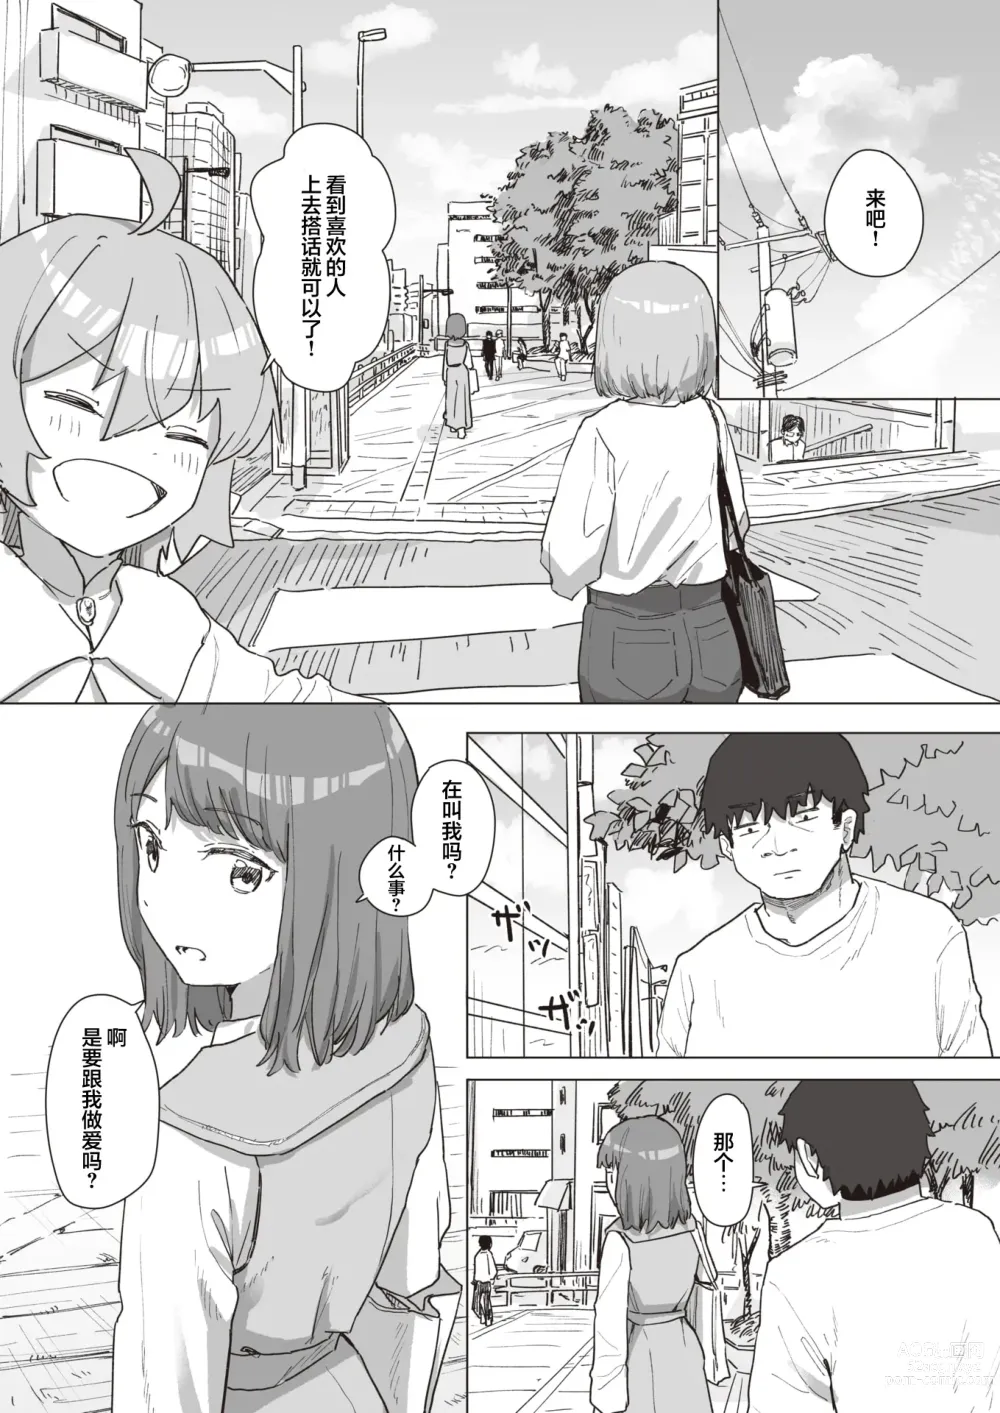 Page 16 of manga Mahou Shoujo no Ongaeshi Chuuhen - Magical Girls Giving Back